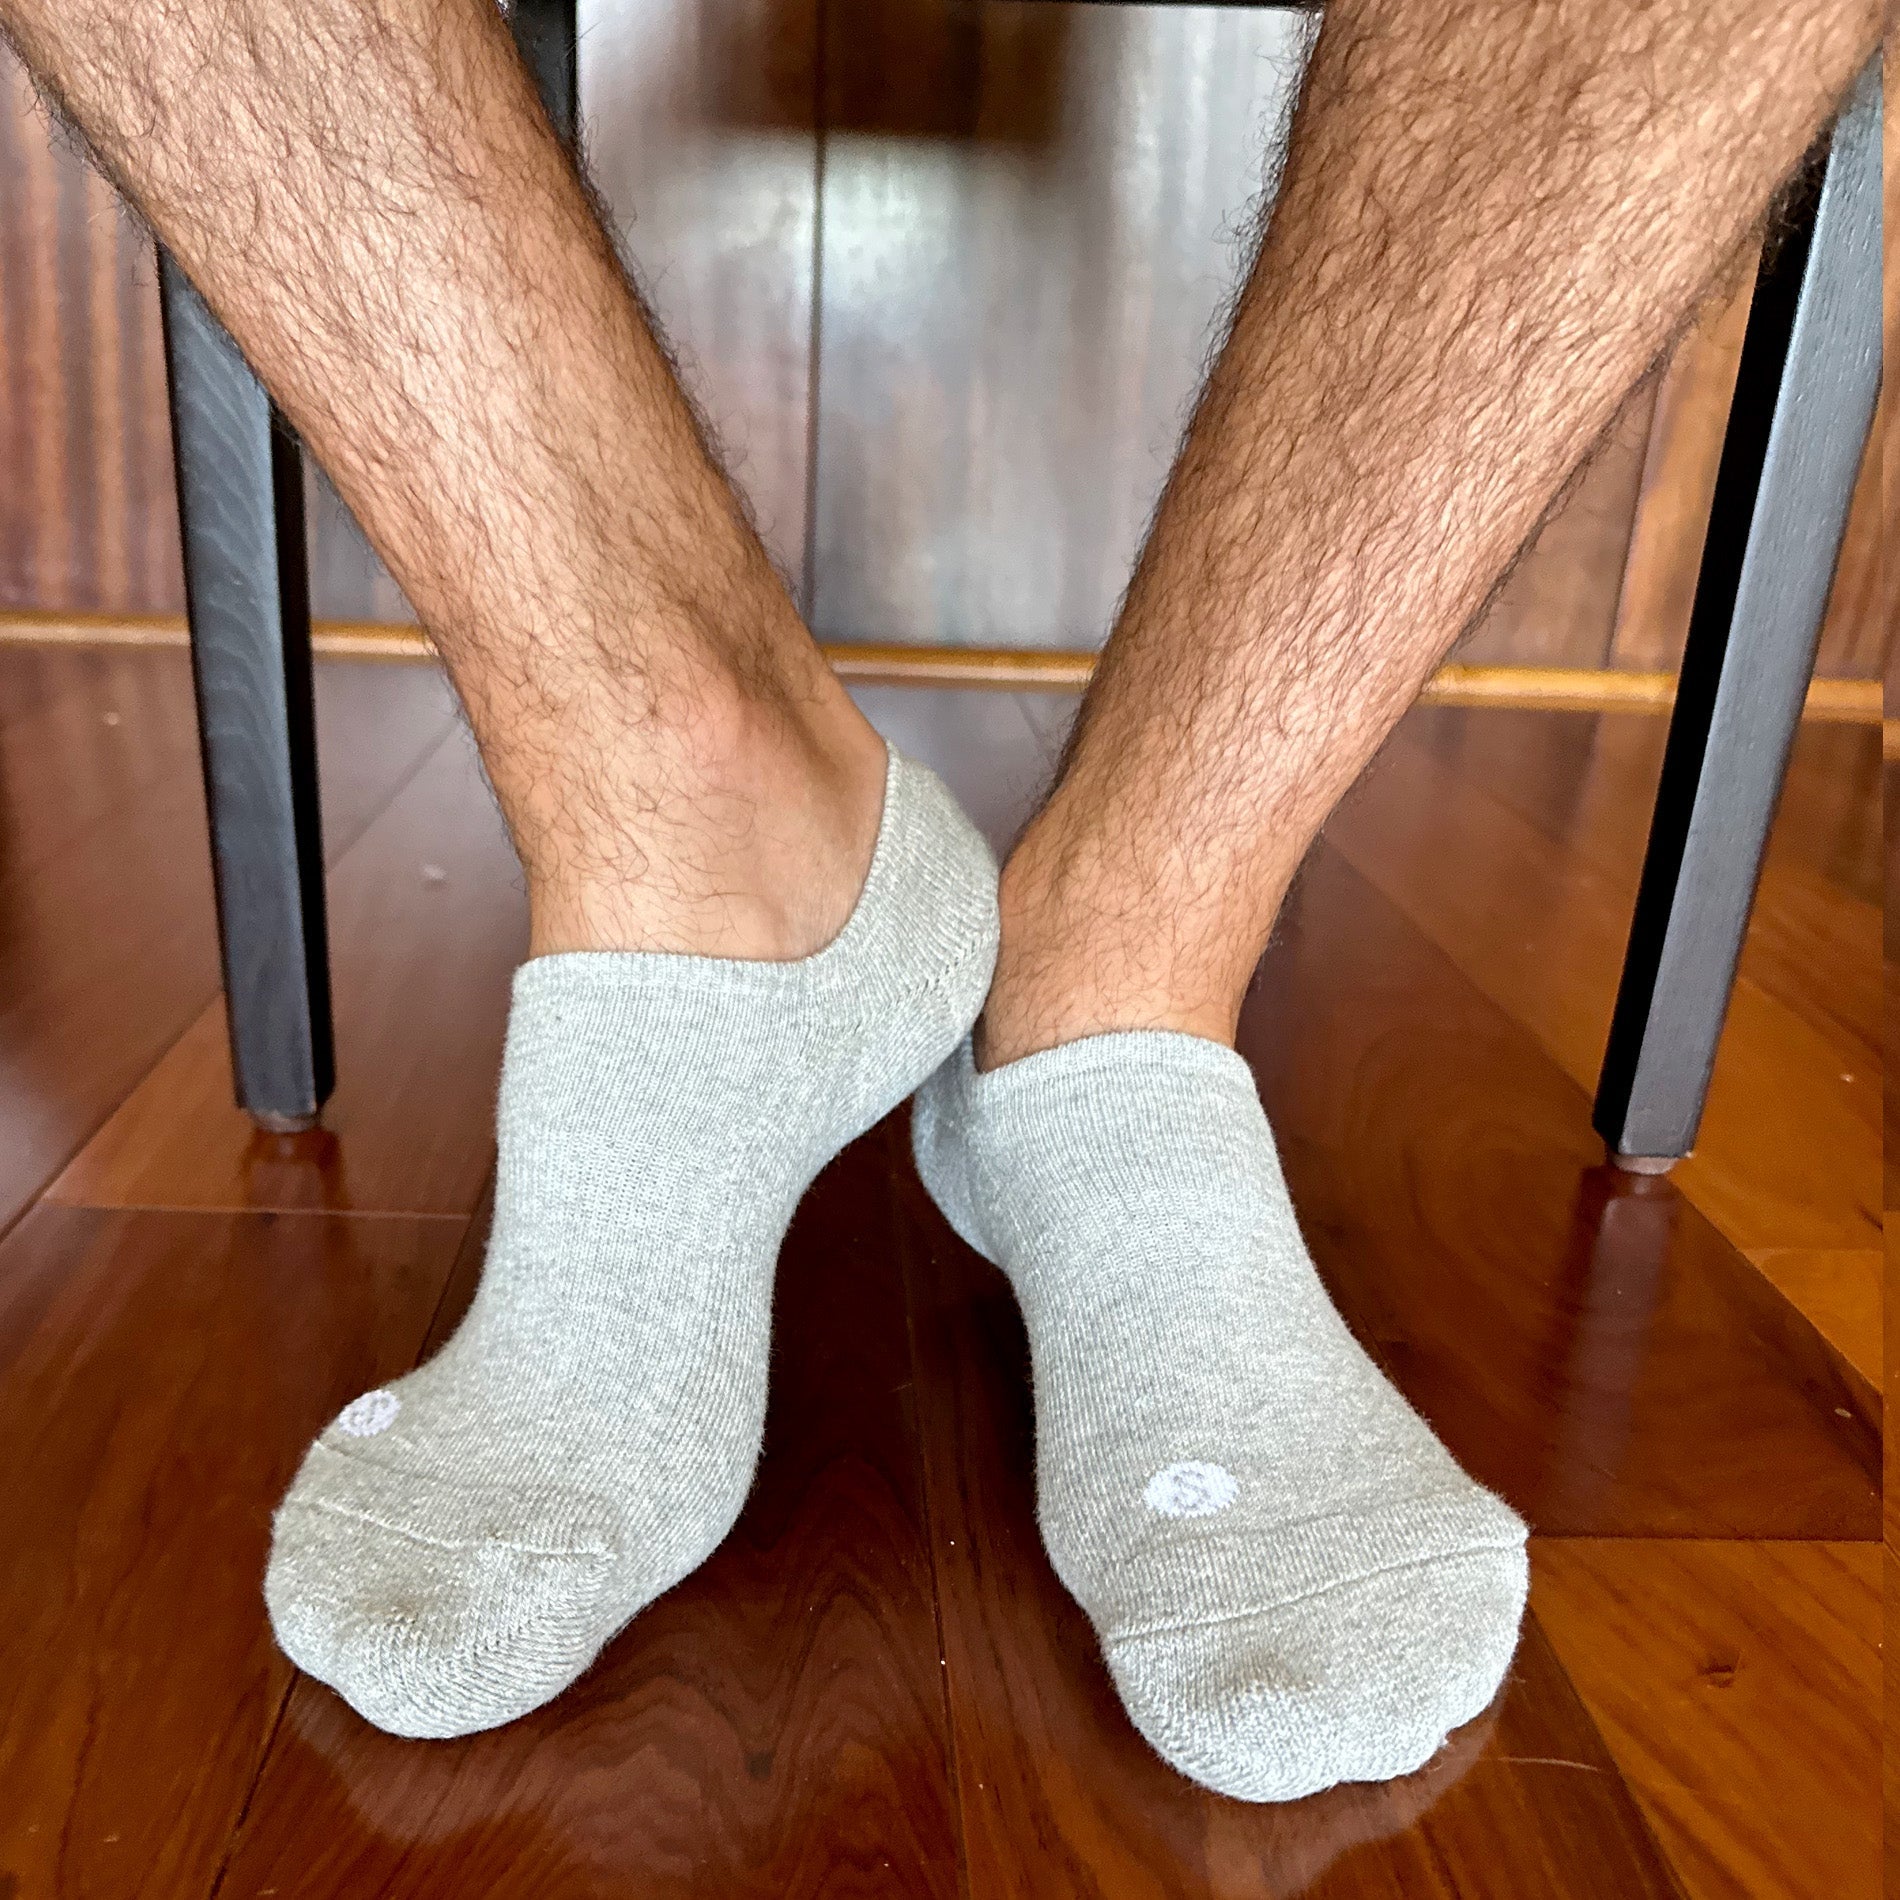 Skinnys Performance, Ultra-Thick No-Show Socks